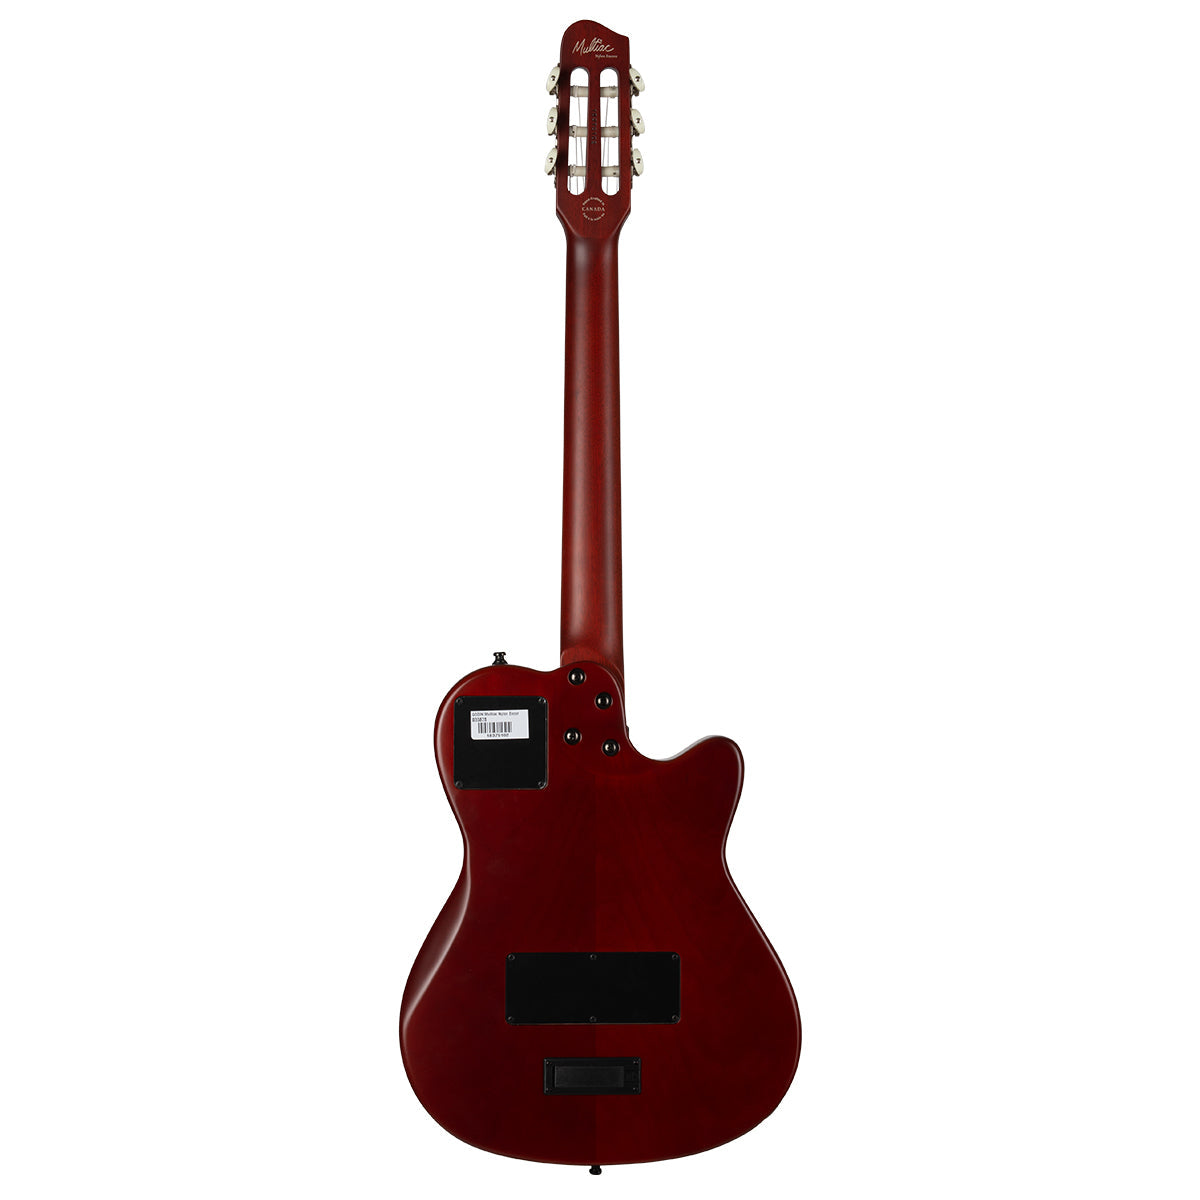 Godin Multiac Nylon Encore Guitar ~ Left Hand ~ Natural, Electric Guitar for sale at Richards Guitars.